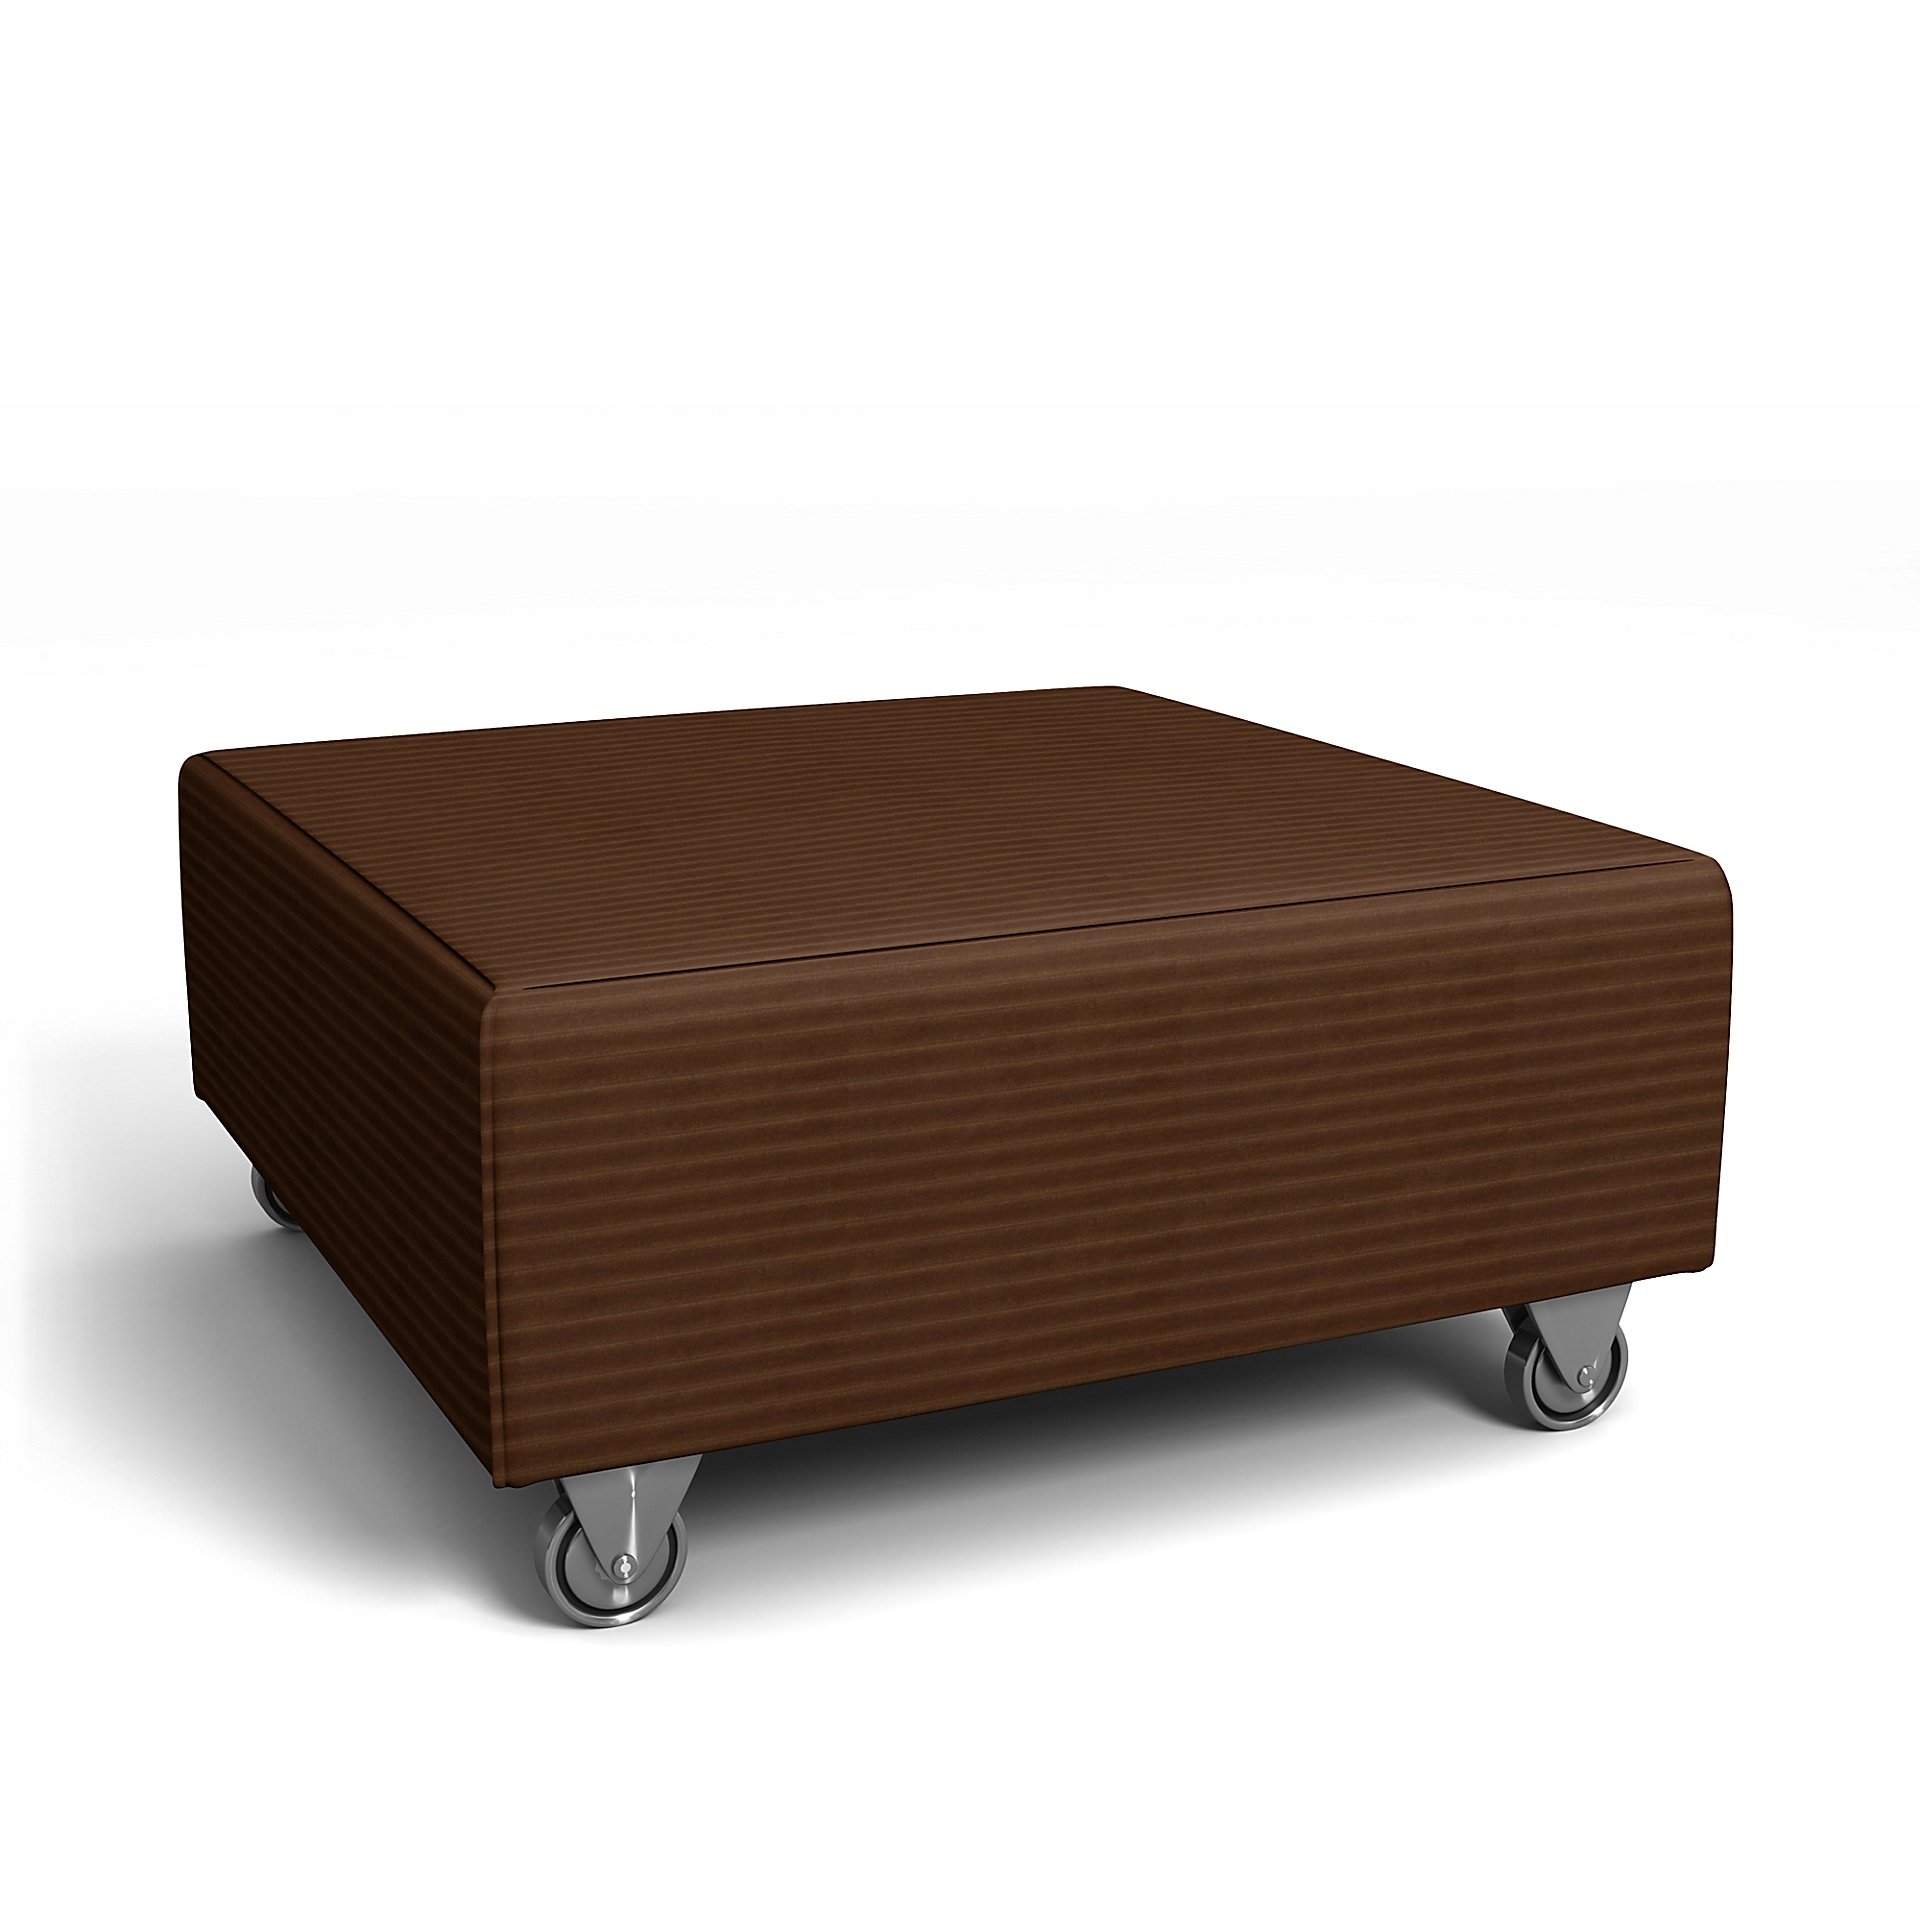 IKEA - Falsterbo Footstool Cover, Chocolate Brown, Corduroy - Bemz